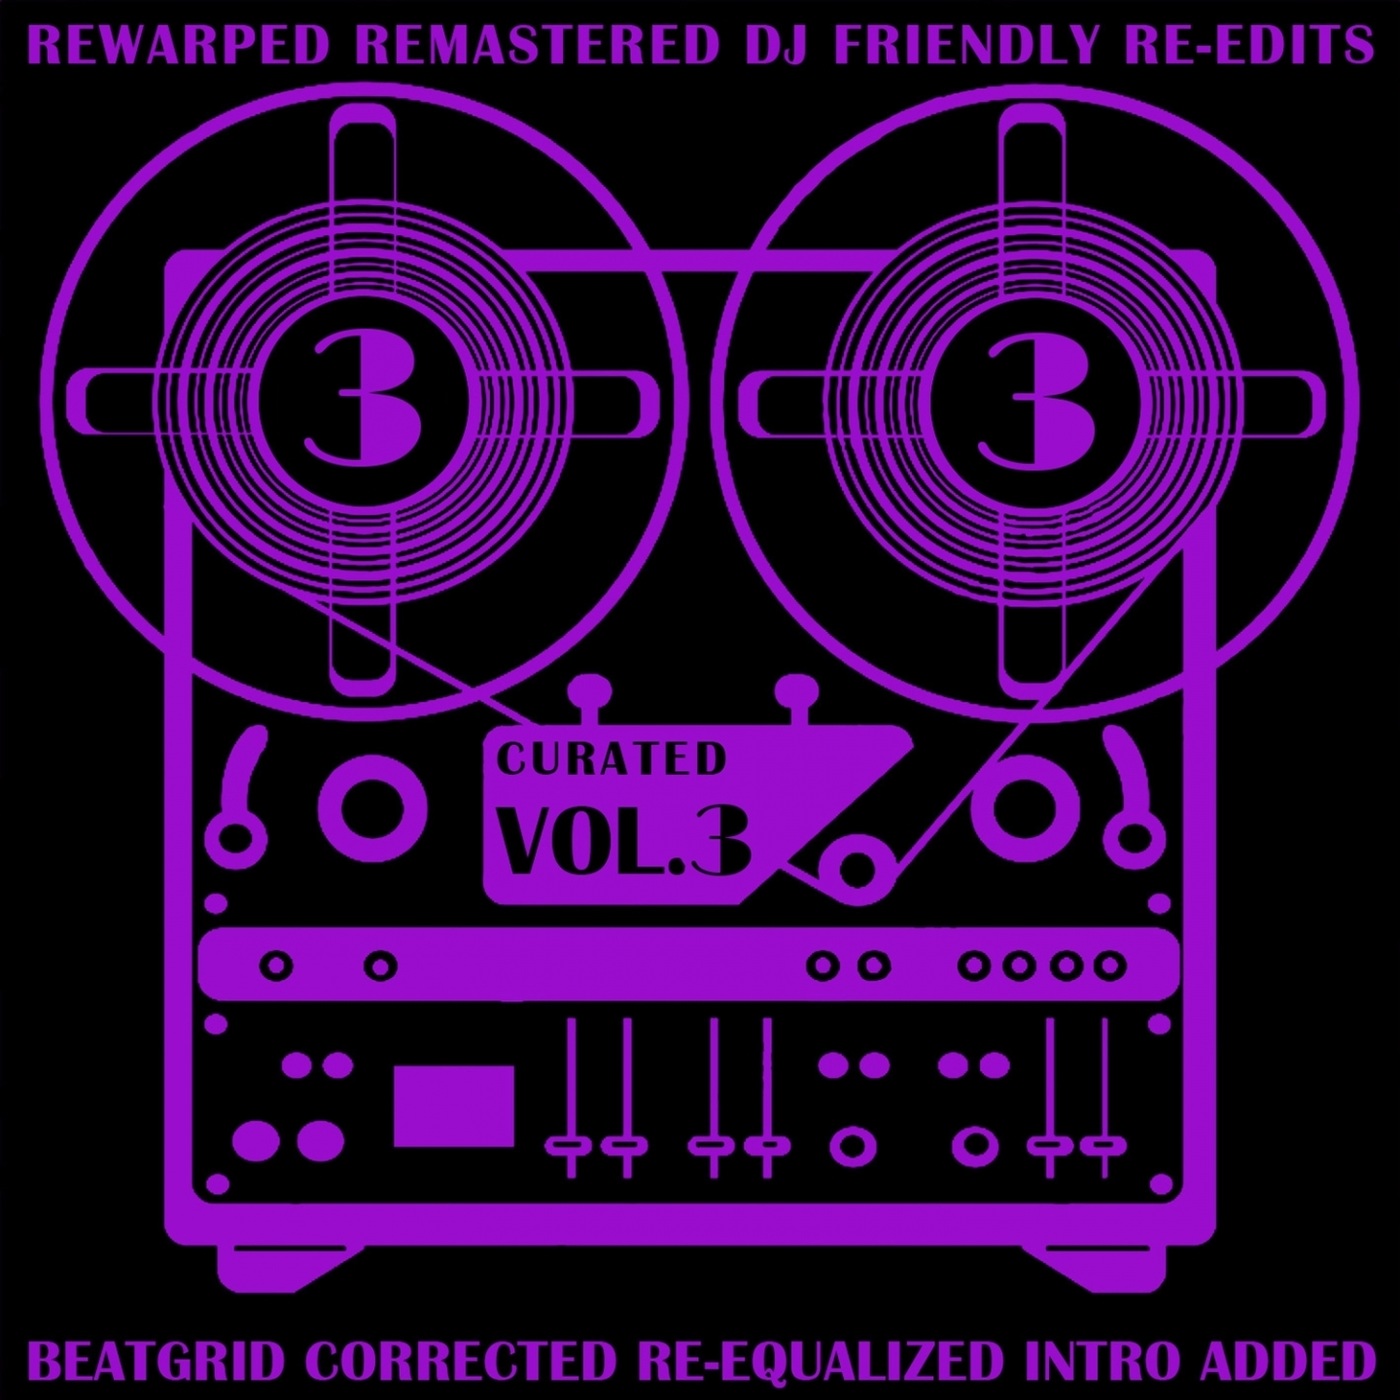 Sam Janipero - Curated, Vol. 3 (Rewarped Remastered DJ Friendly Re-Edits) / Ganbatte Records